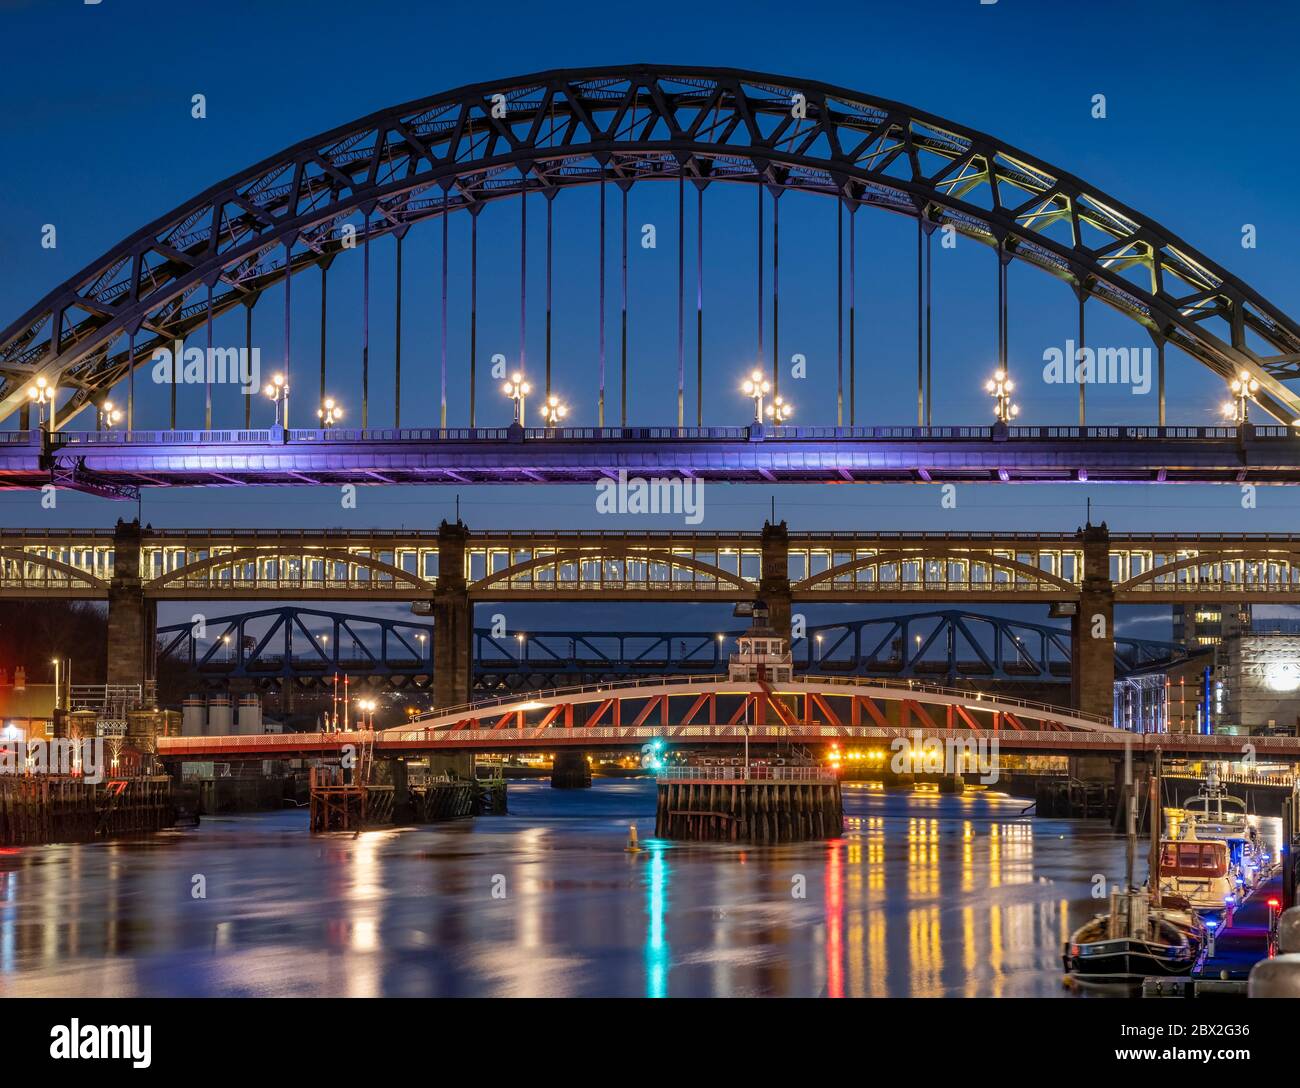 The Tyne Bridge, High Level Bridge and River Tyne at night, Newcastle Upon Tyne, Tyne & Wear, England, UK Stock Photo